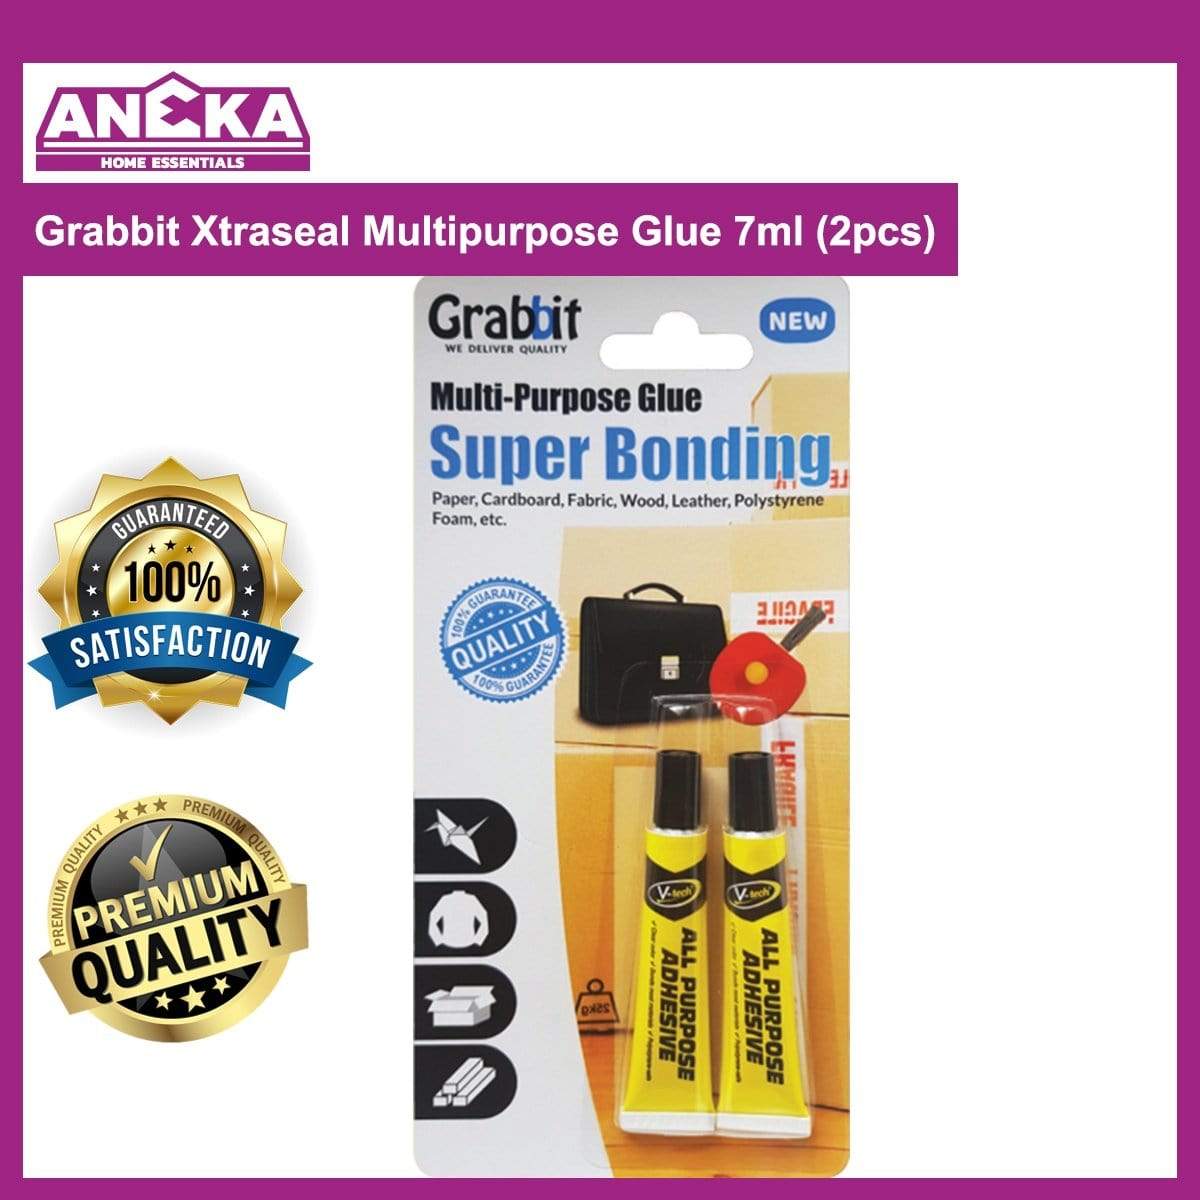 Grabbit Xtraseal Multipurpose Glue 7ml (2pcs)